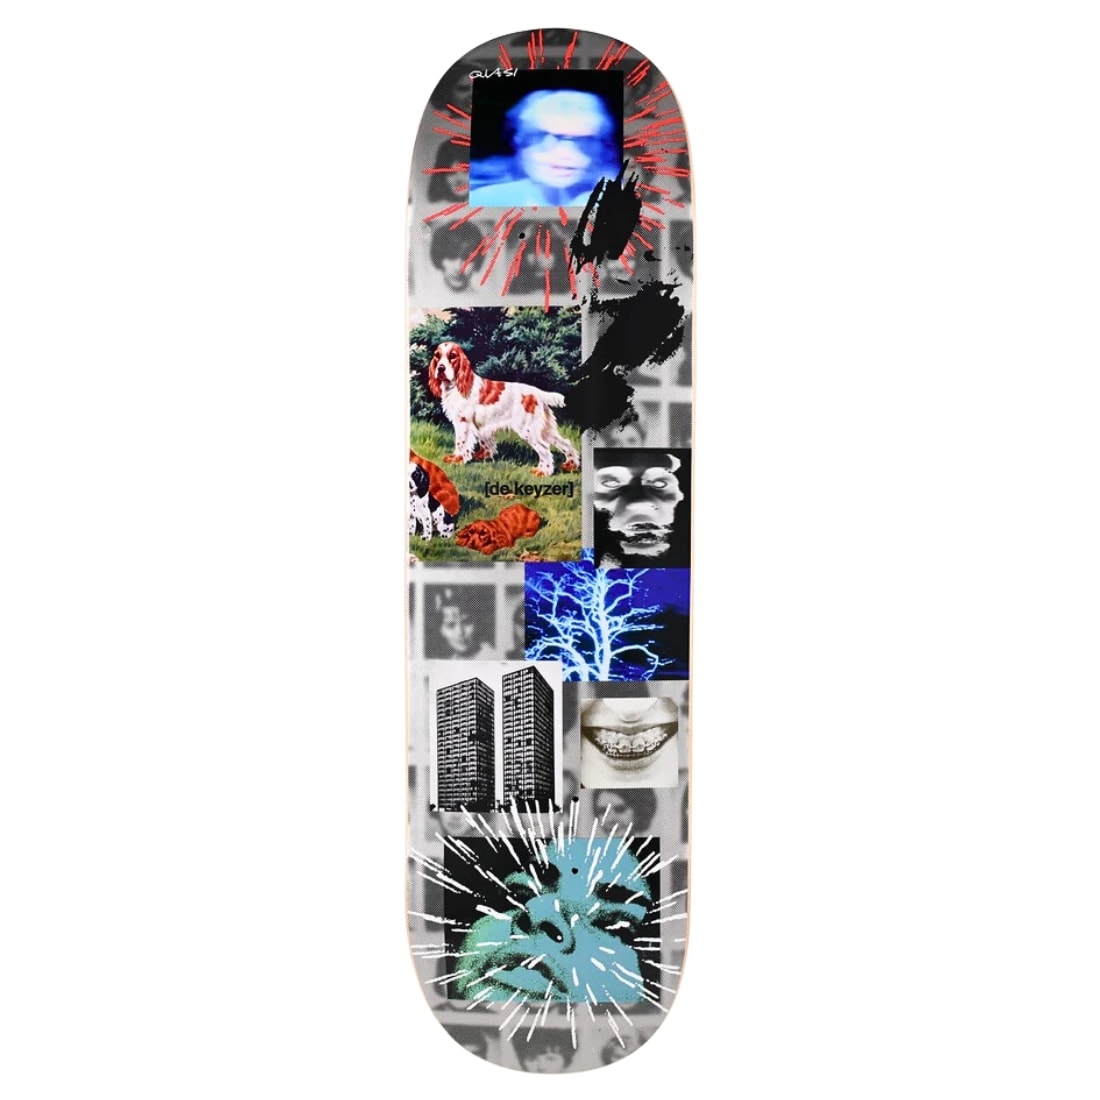 Quasi 8.5&quot; De Keyzer Hard Drive Deck - Multi - Skateboard Deck by Quasi 8.5 inch